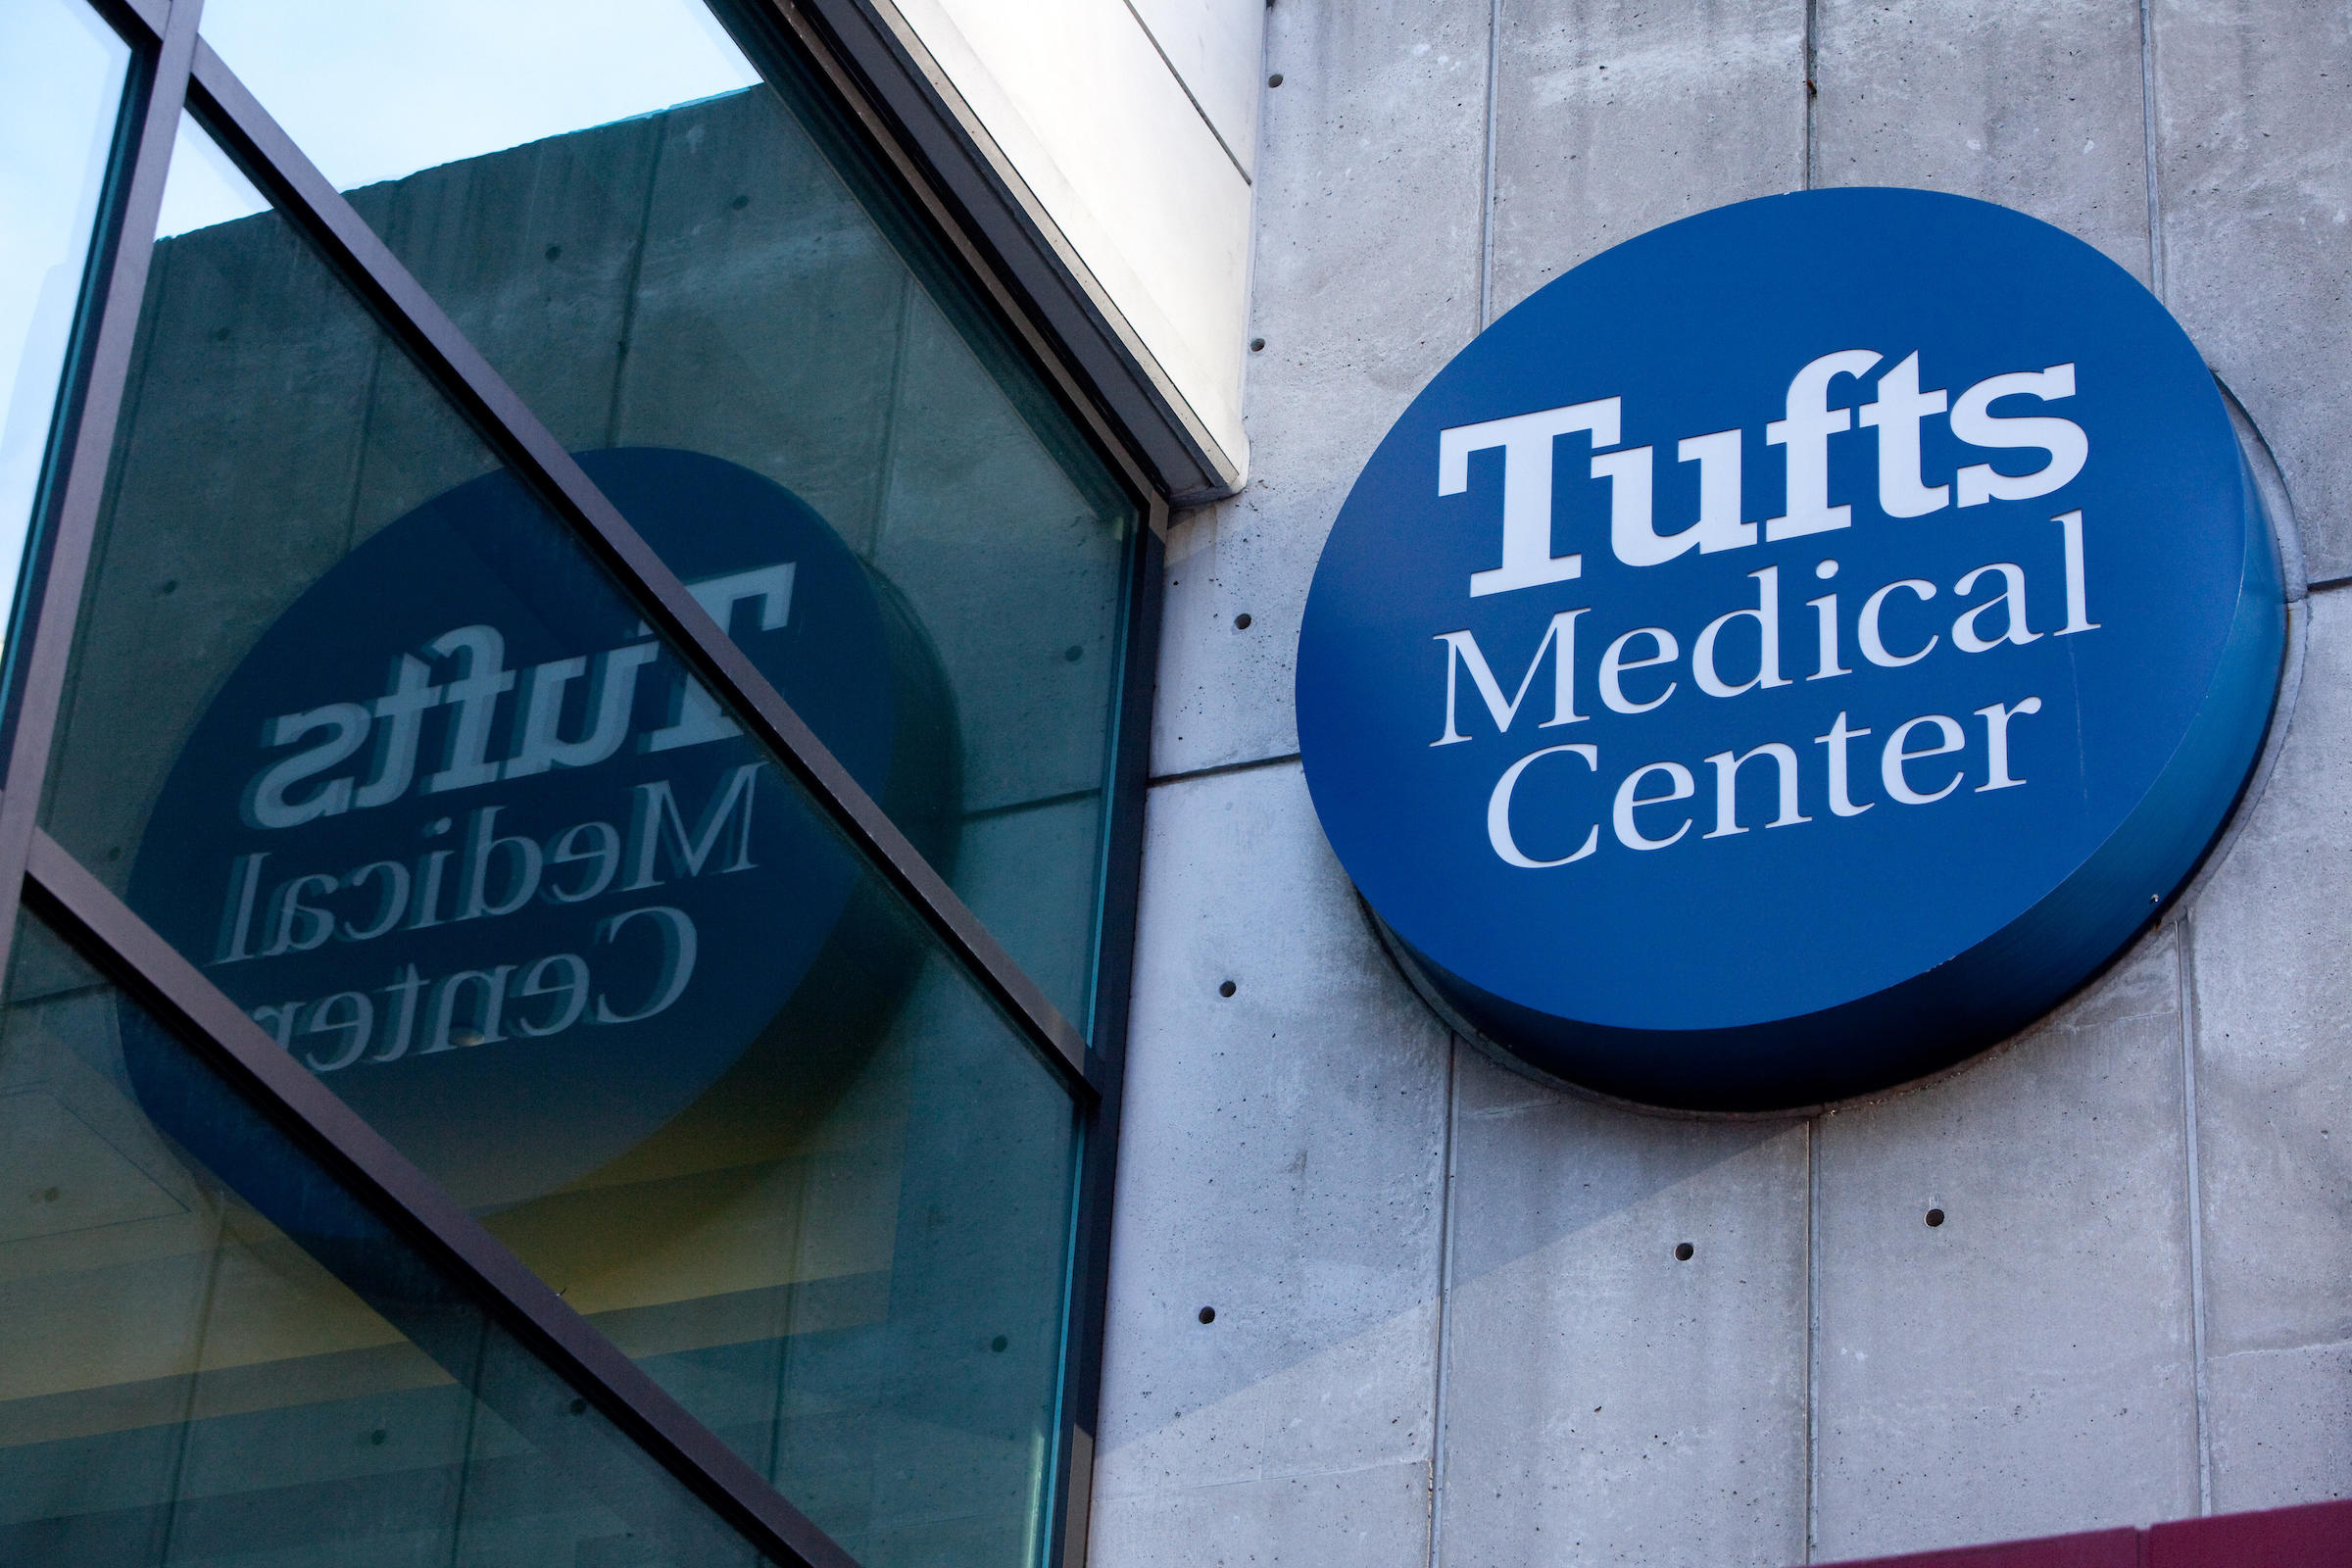 Tufts Medical Center building image